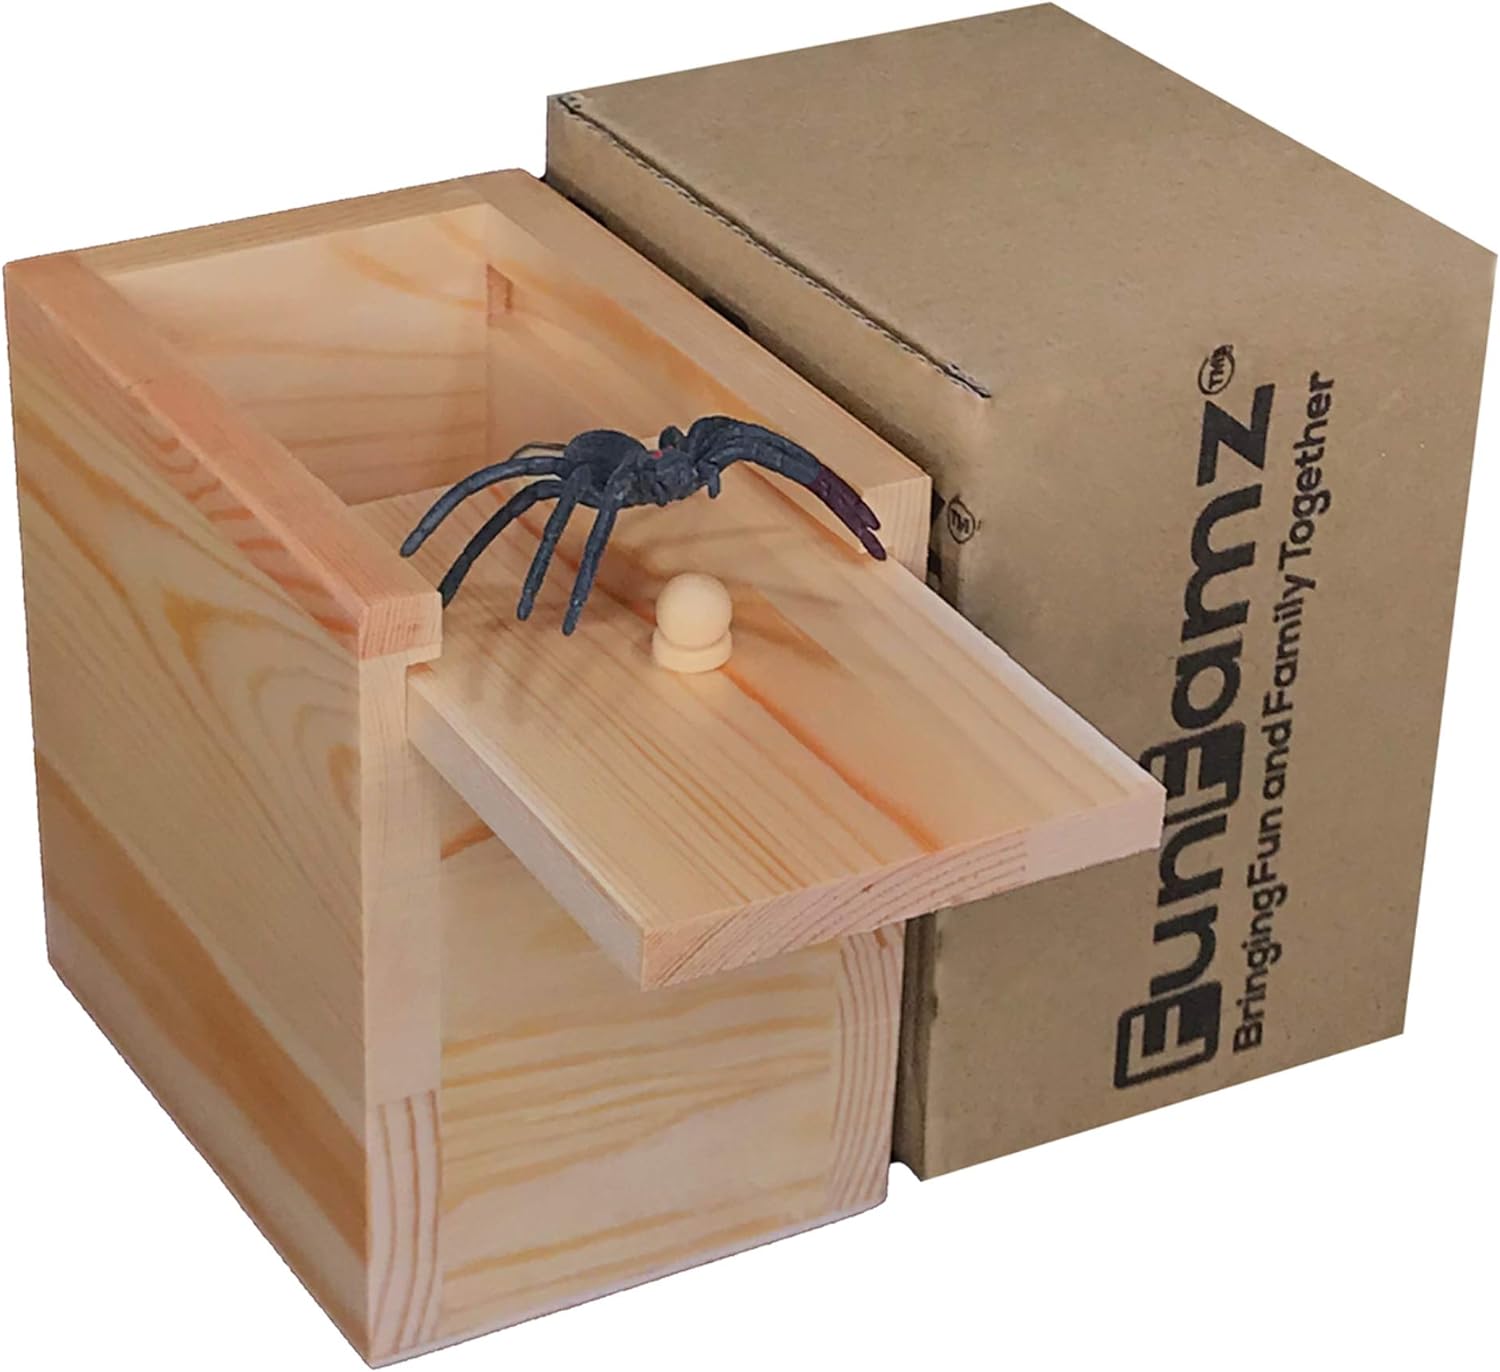 The Original Spider Prank Box - Funny Wooden Box Toy Prank